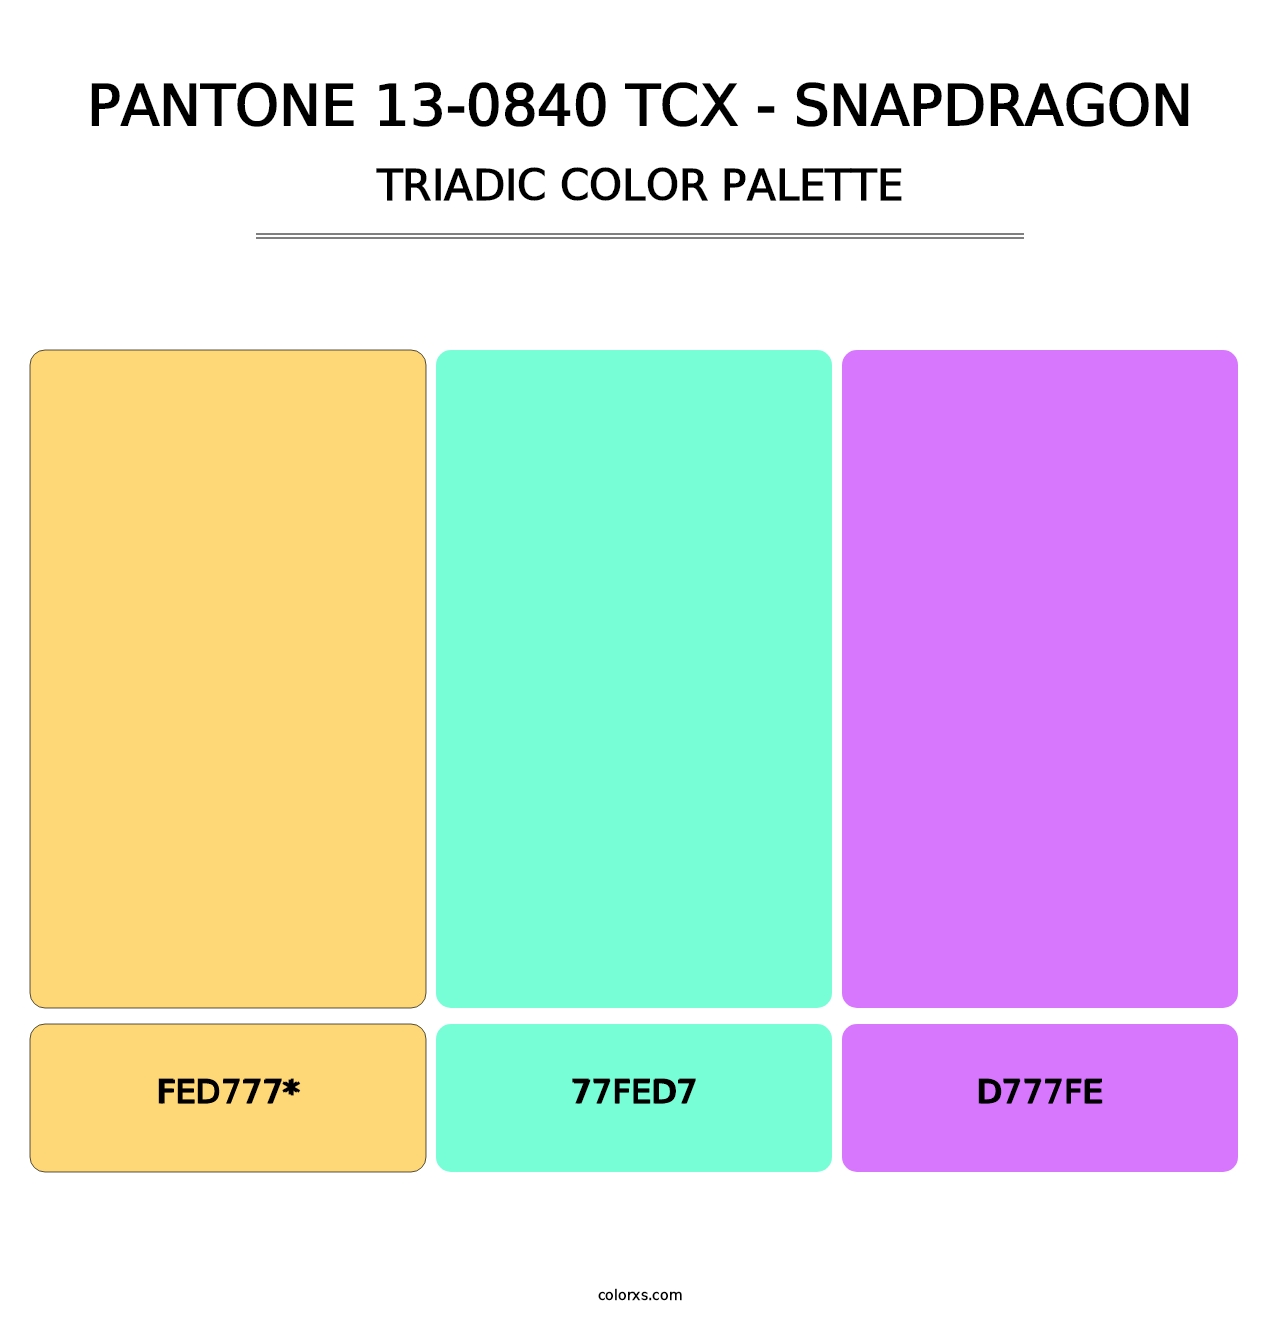 PANTONE 13-0840 TCX - Snapdragon - Triadic Color Palette